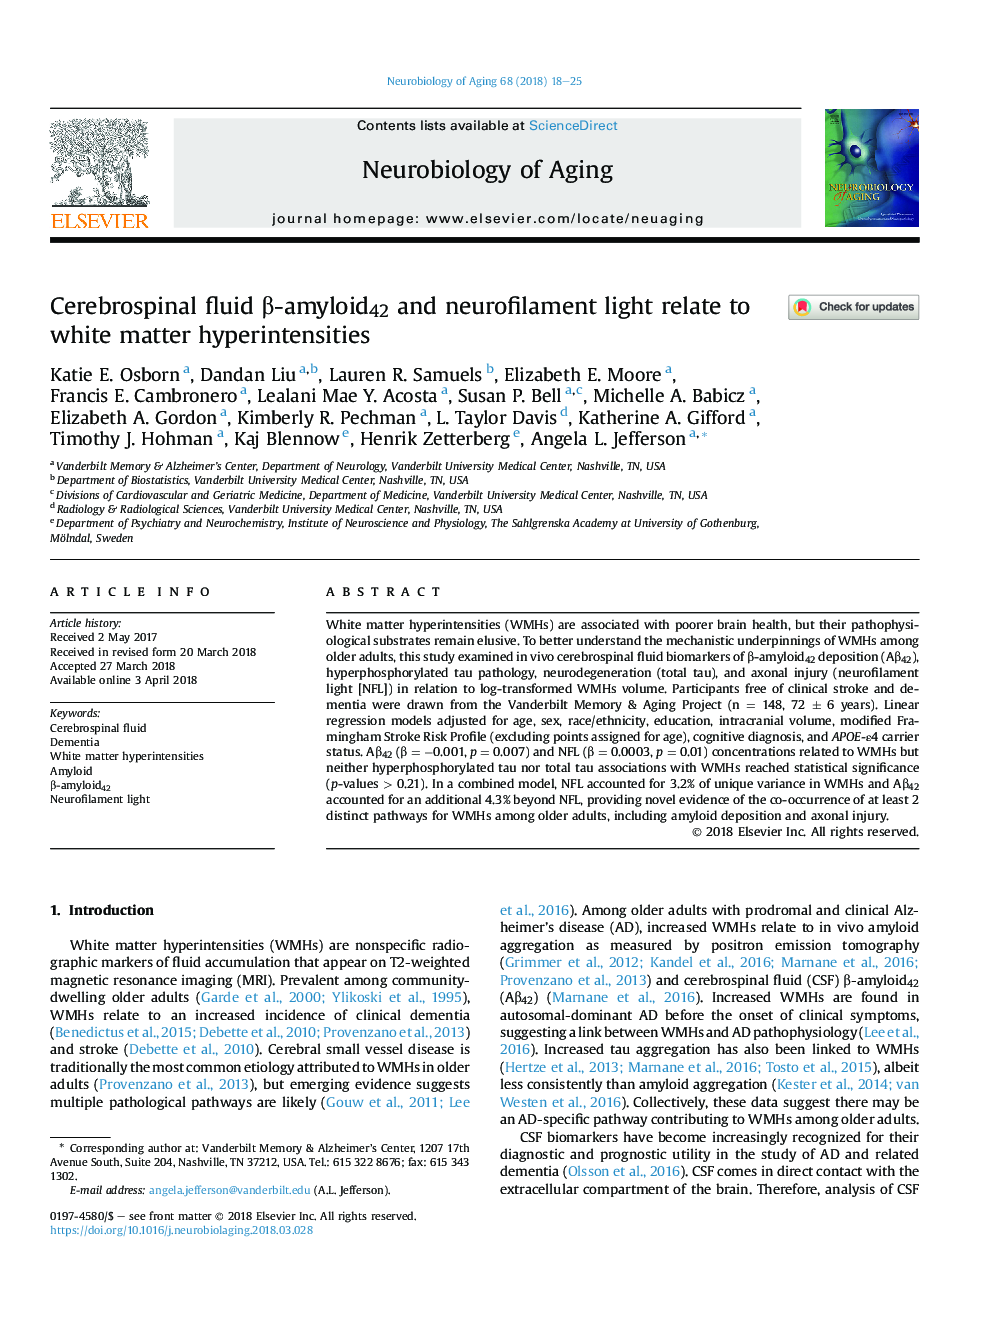 Cerebrospinal fluid Î²-amyloid42 and neurofilament light relate to white matter hyperintensities